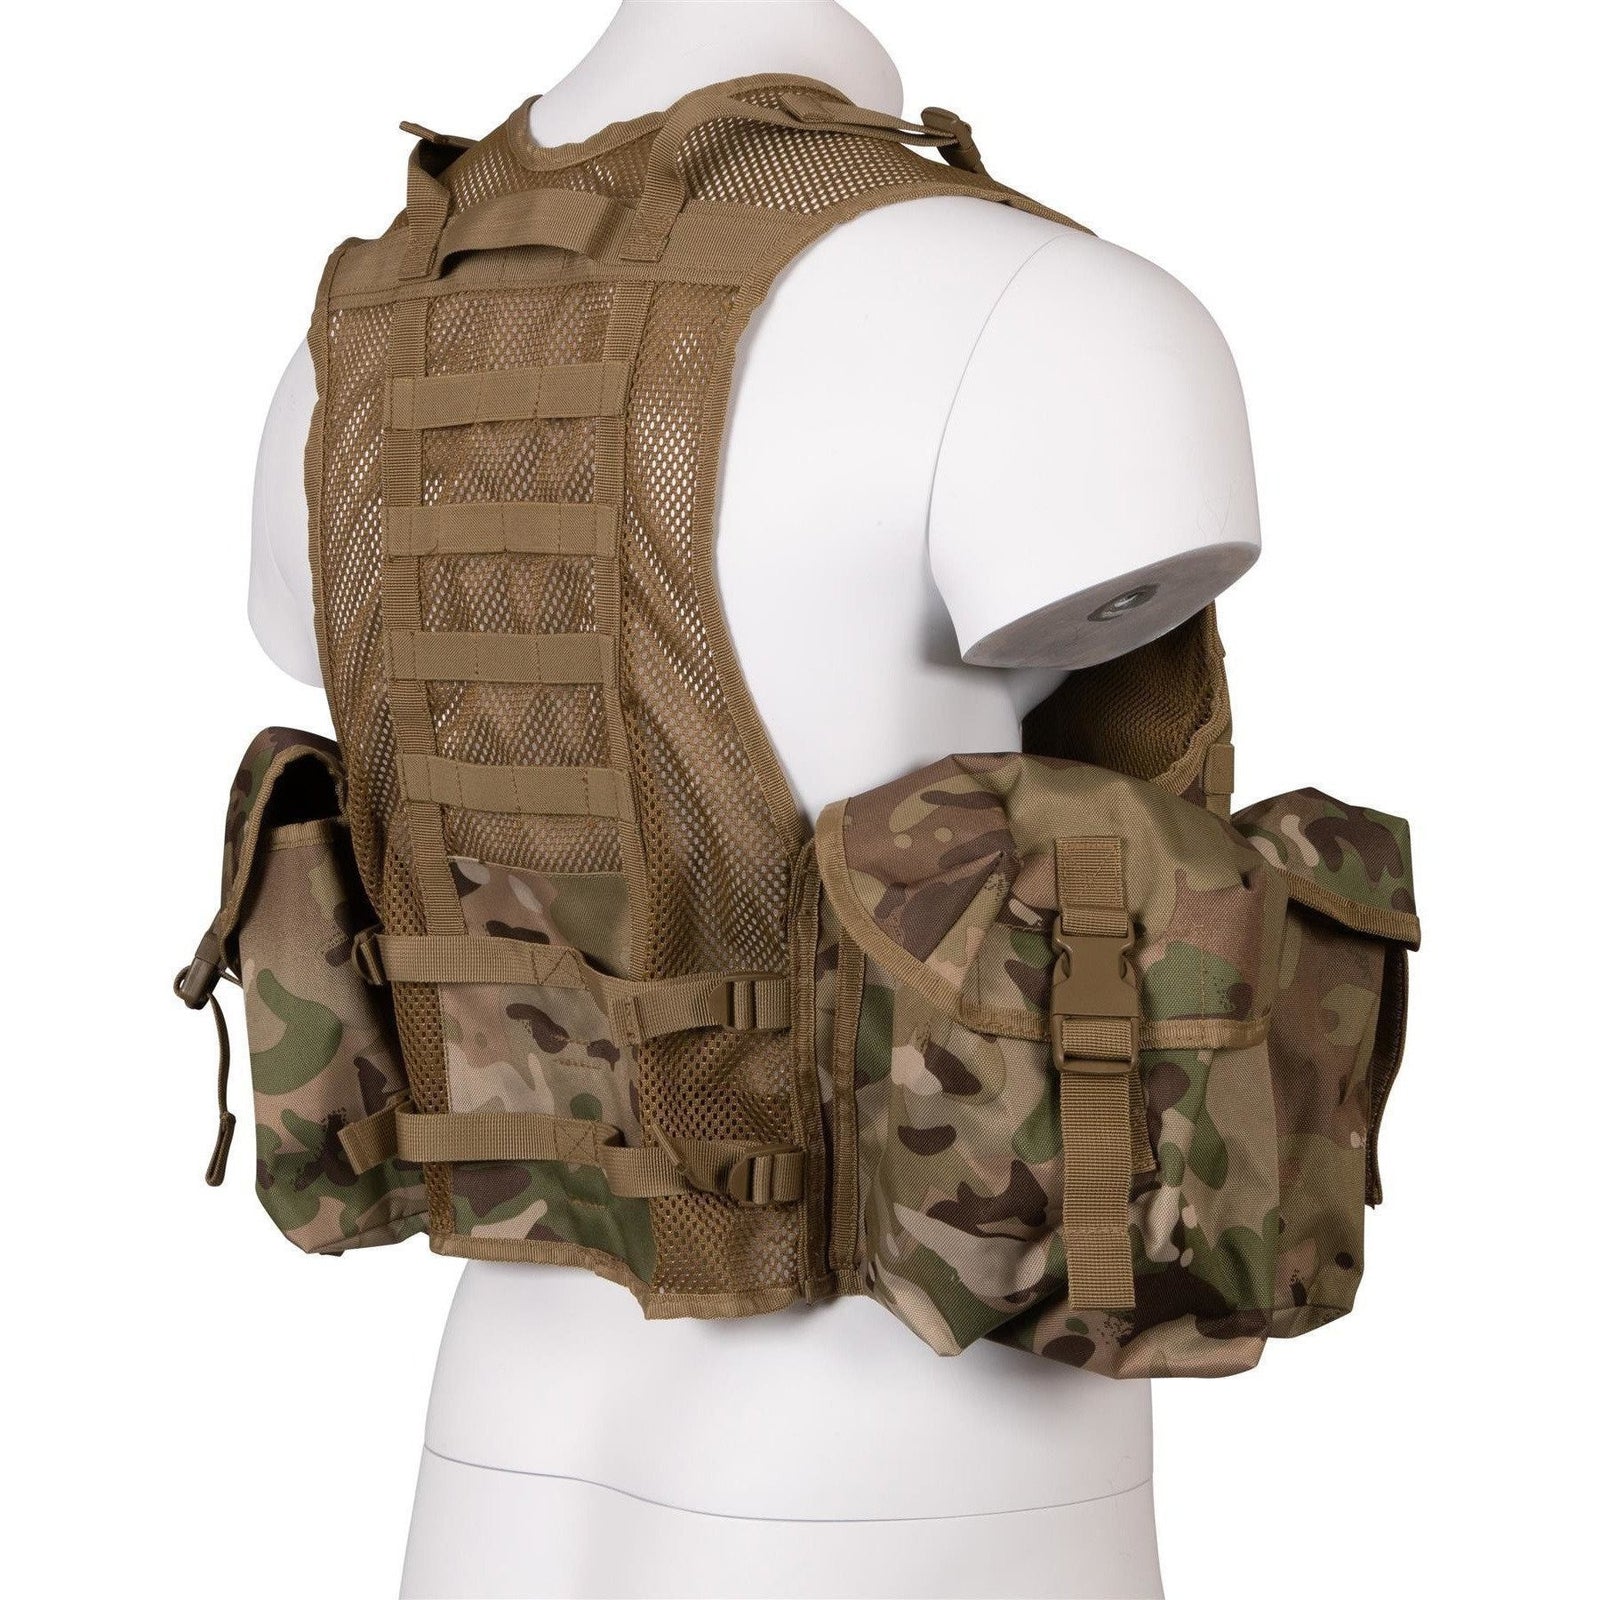 Cadet Training Vest MTP - MK5 - NSN-9999 G0 009 2896. | Cadet Kit Shop